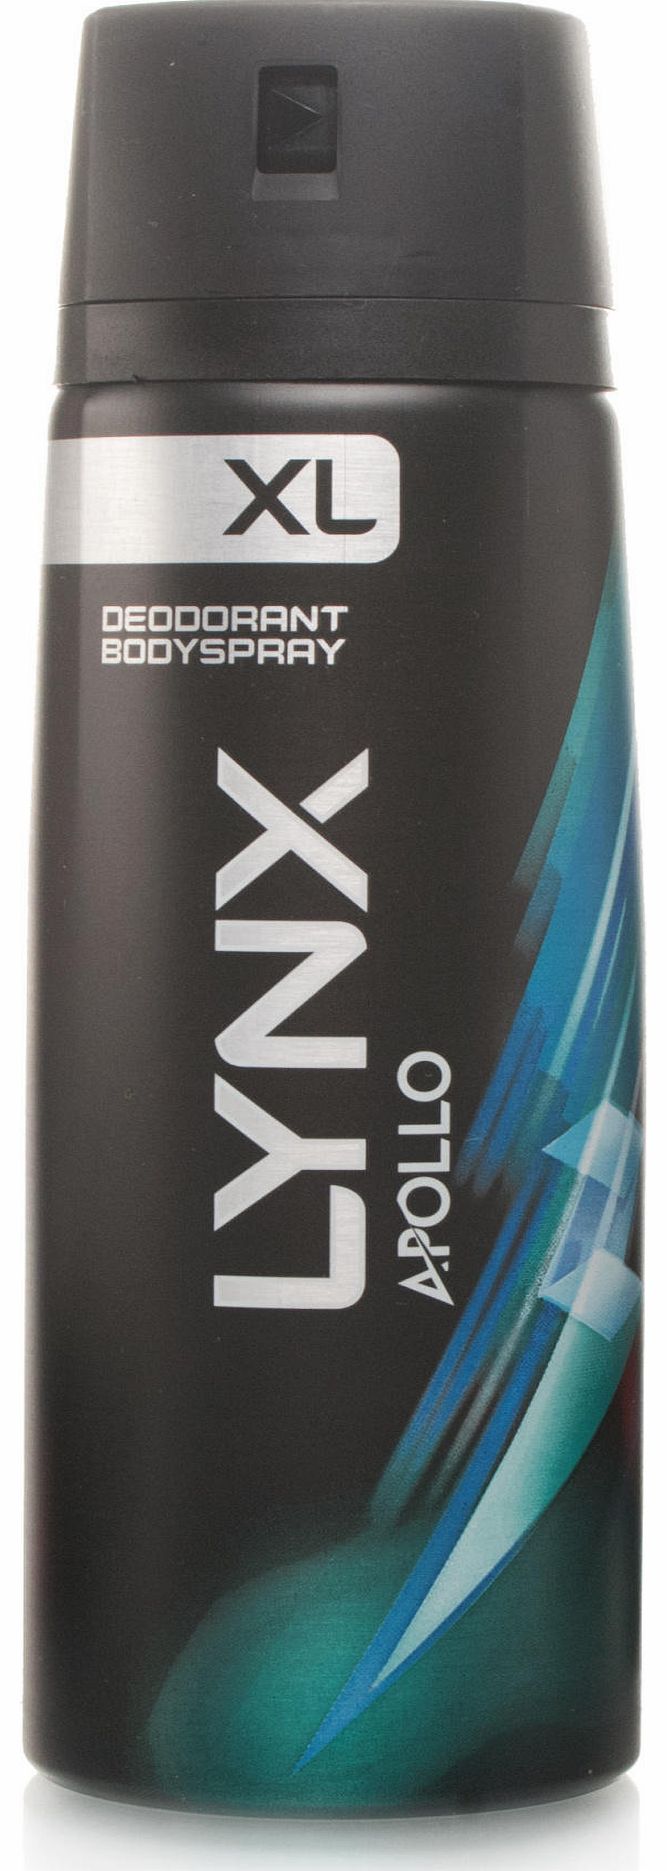 Apollo XL Deodorant Bodyspray